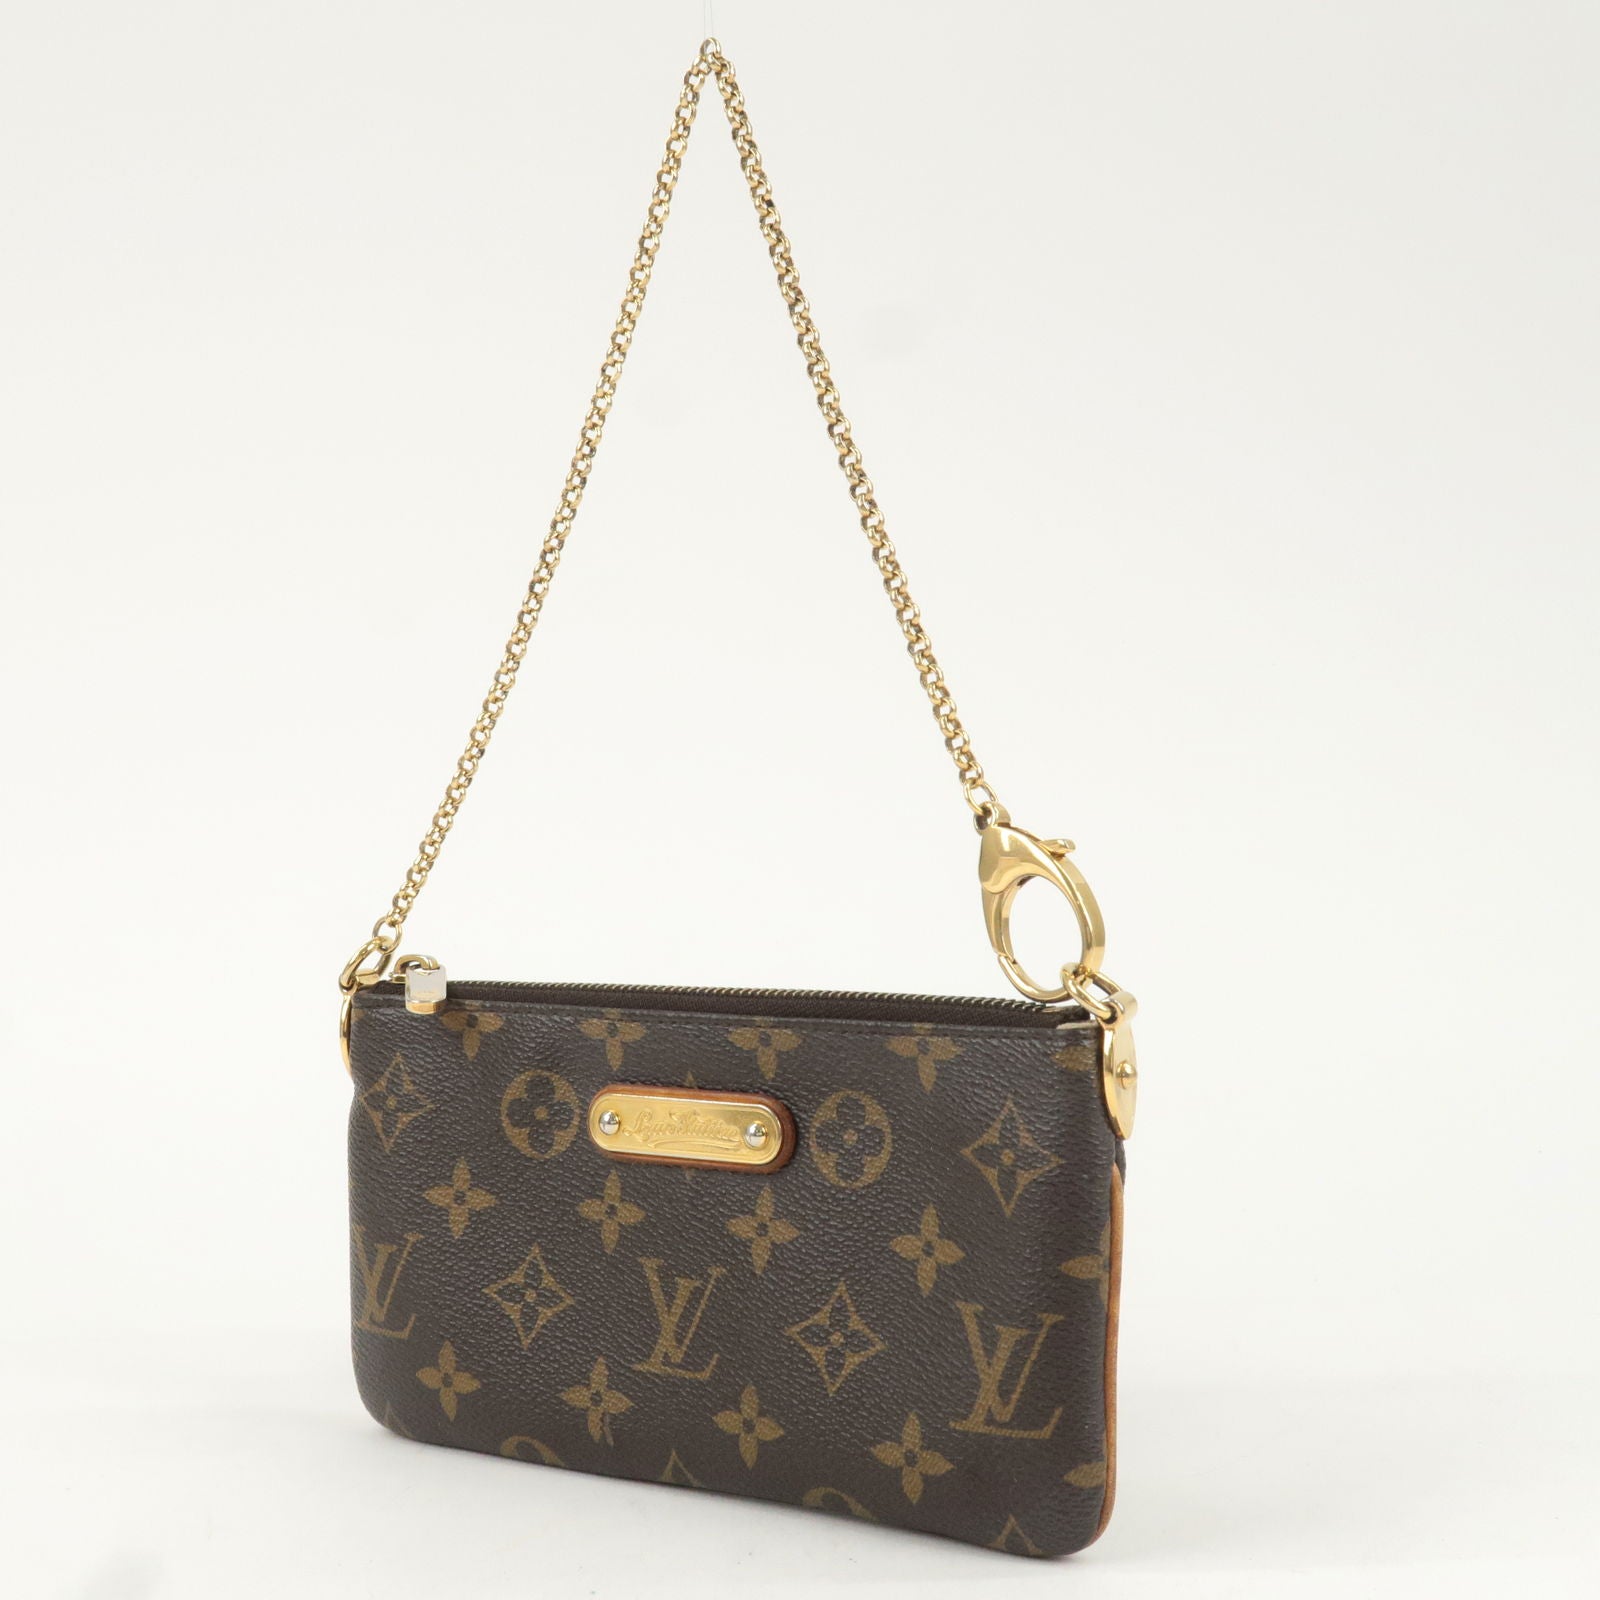 Similar Option to the Louis Vuitton Blossom MM? : r/handbags